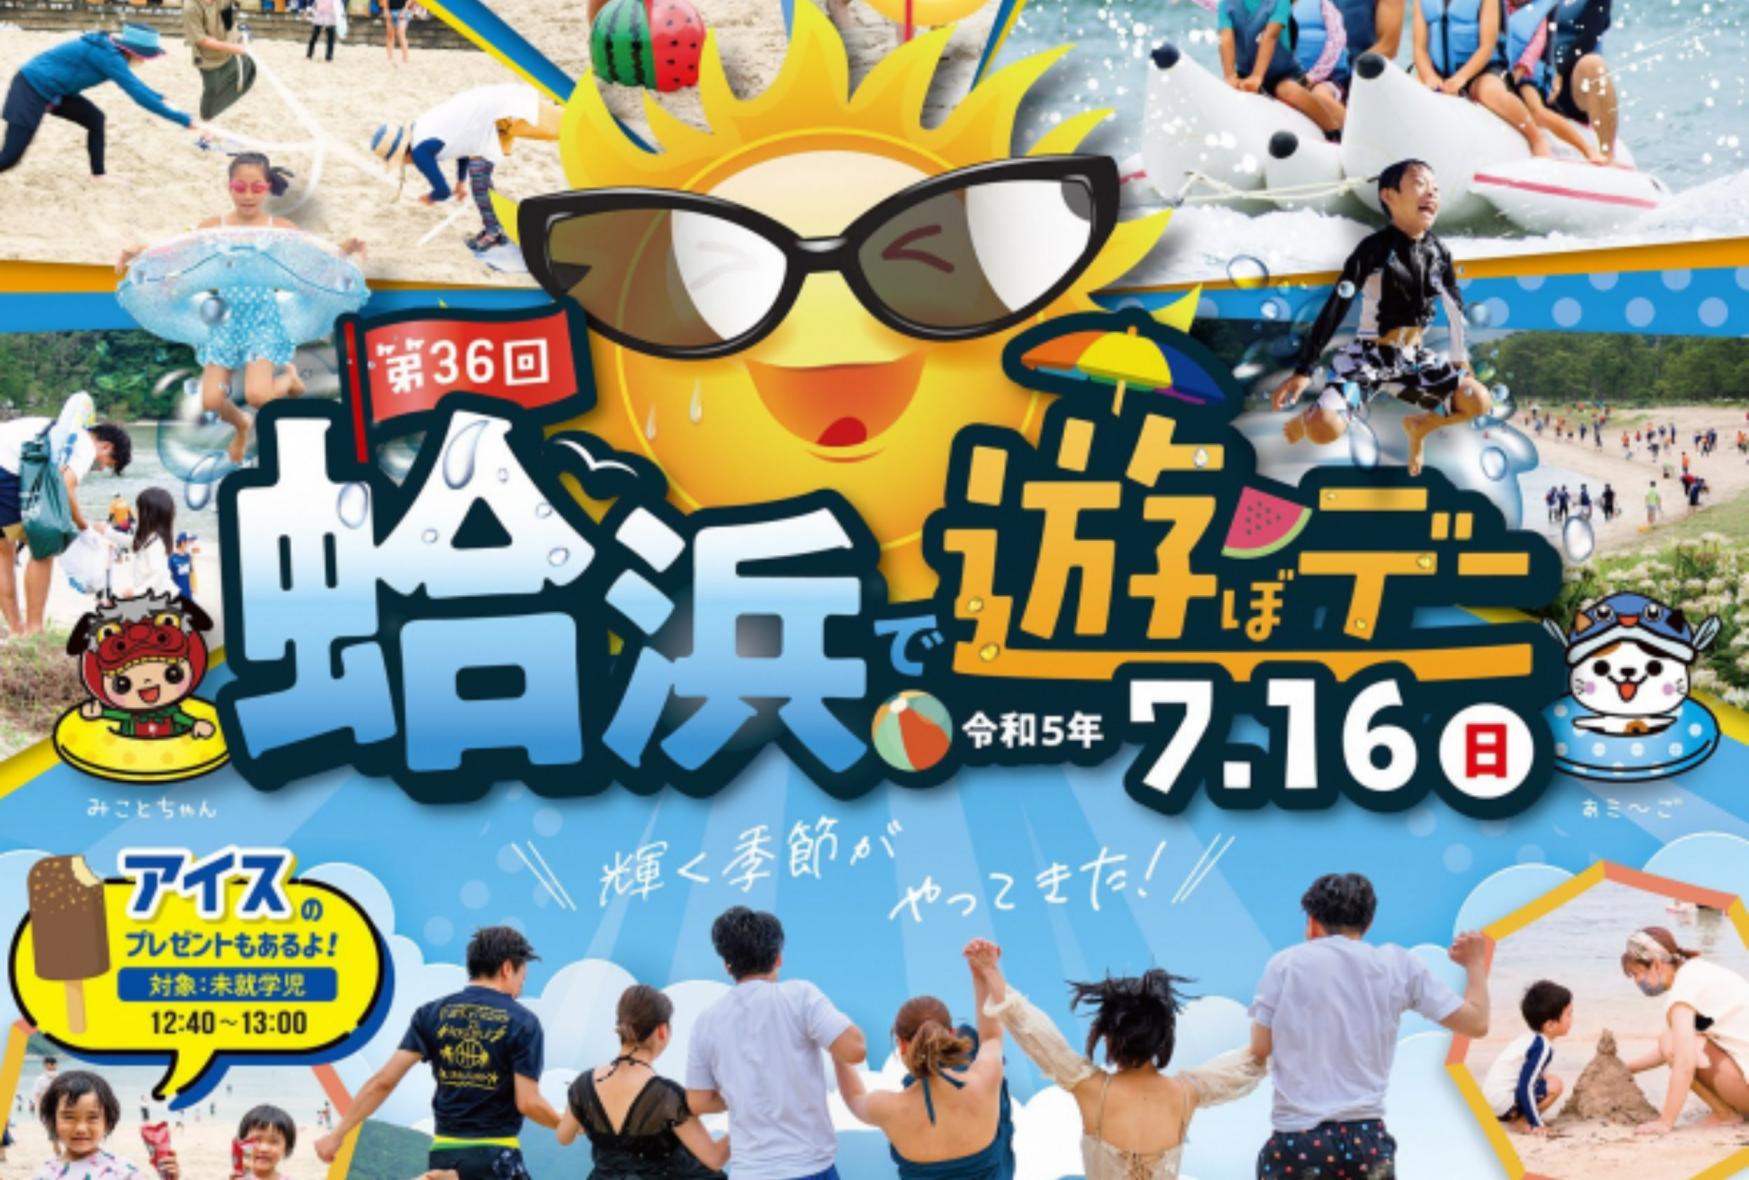 Let’s Play at Hamaguri Beach Day-3